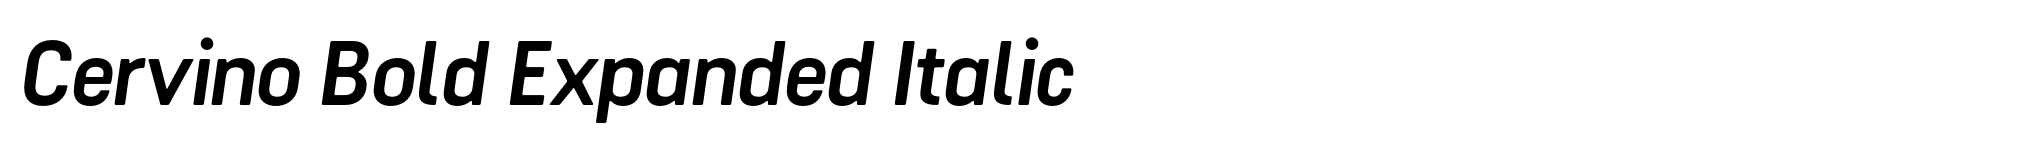 Cervino Bold Expanded Italic image